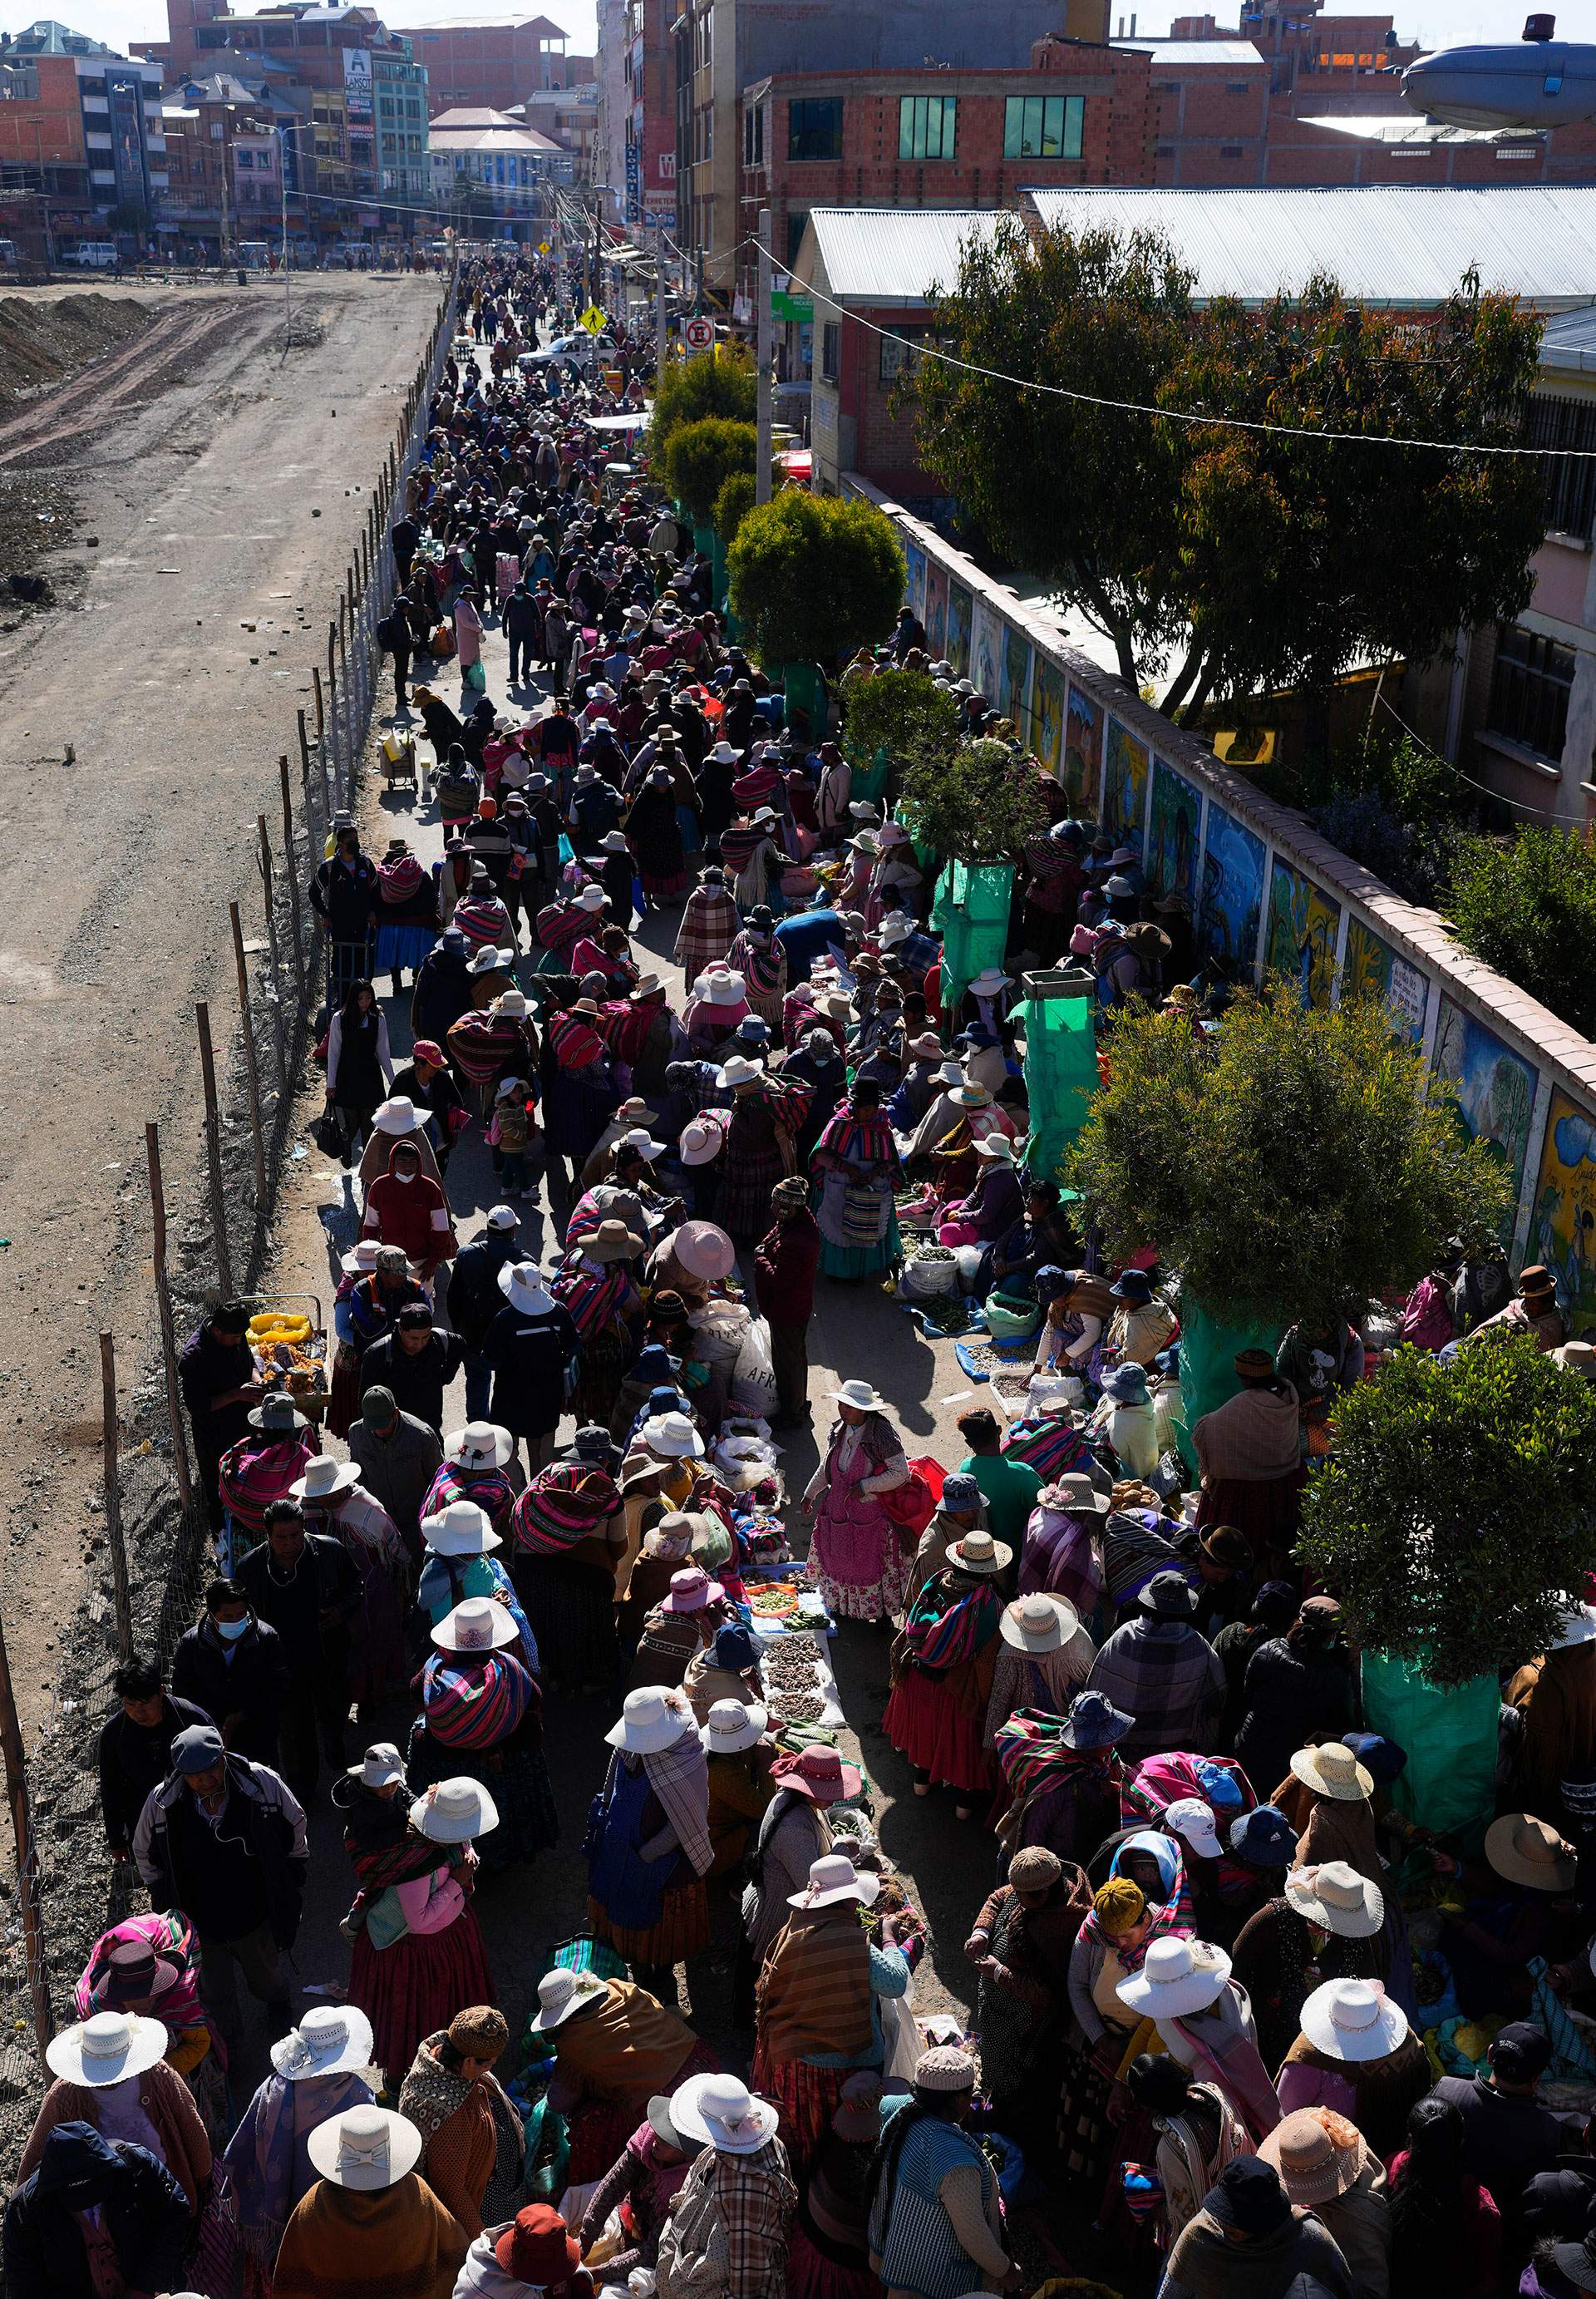 La gente llena un mercado callejero en El Alto, Bolivia, el martes 11 de abril de 2023. (Foto AP/Juan Karita)

